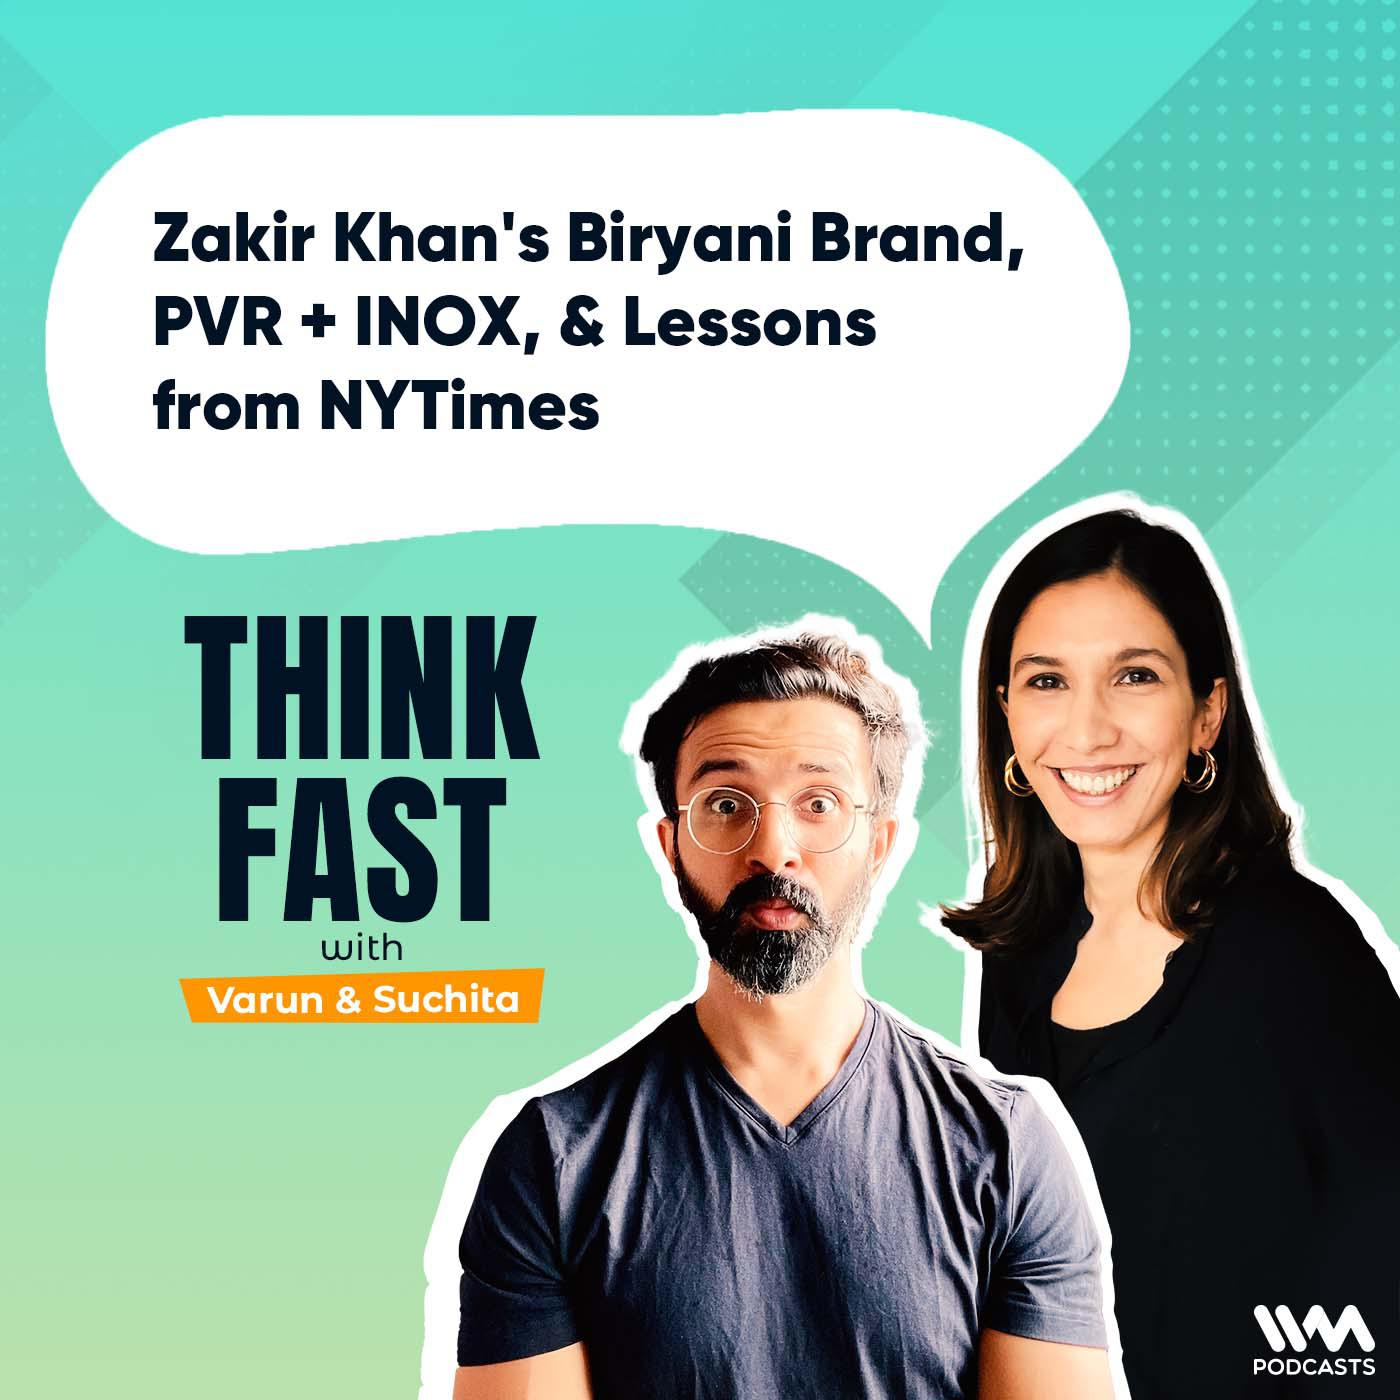 Zakir Khan’s Biryani Brand, PVR + INOX, & Lessons from NYTimes